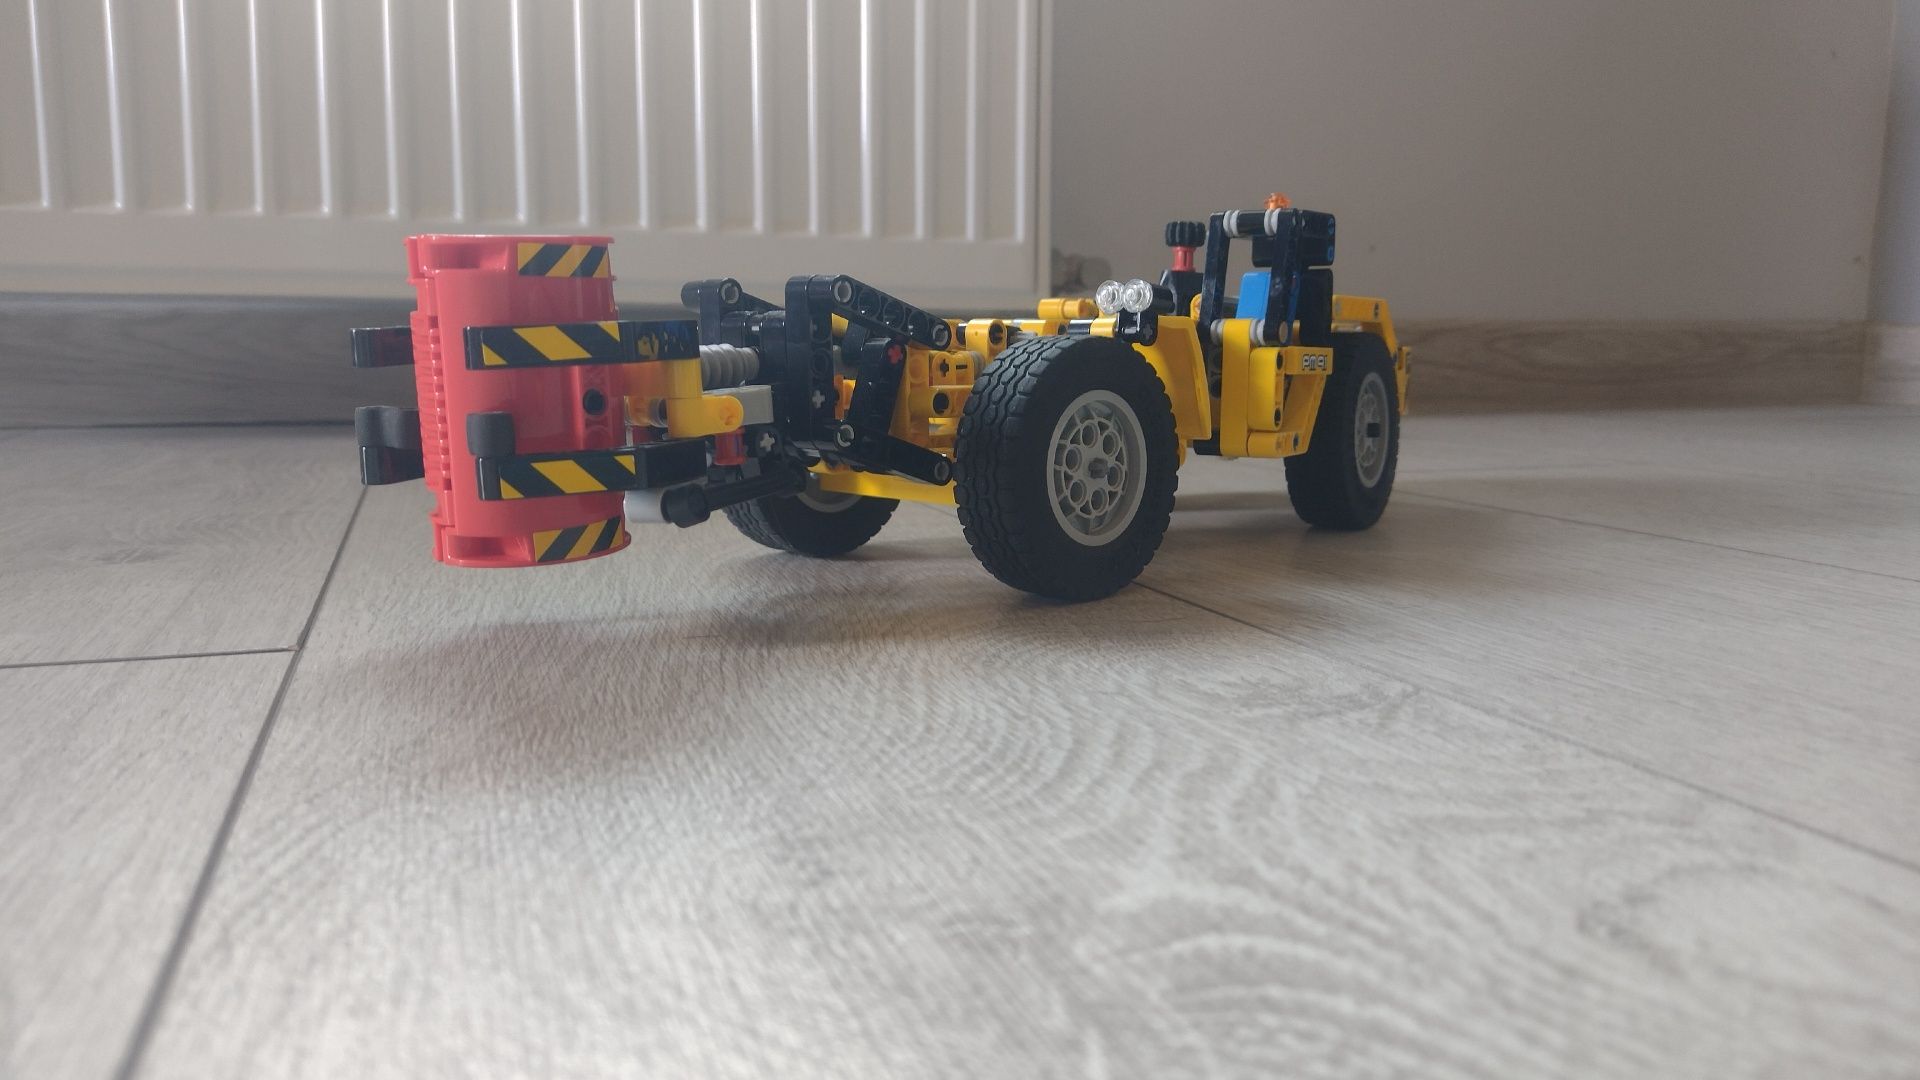 Lego tehnic Utilitara 2 in 1 cod 42049